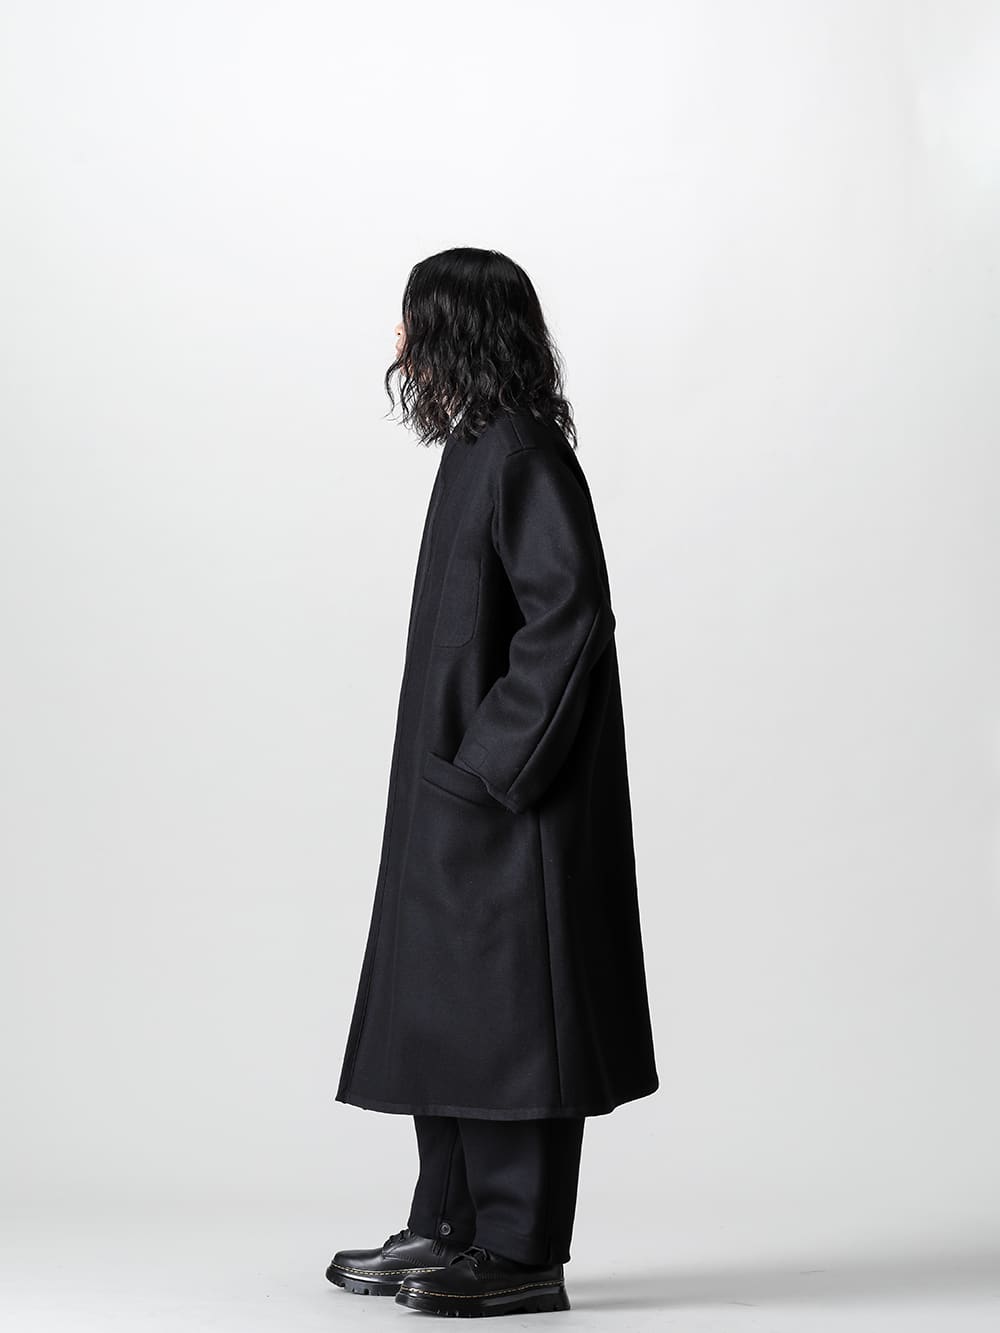 Yohji Yamamoto 21-22AW Army Melton Coat Style - FASCINATE BLOG